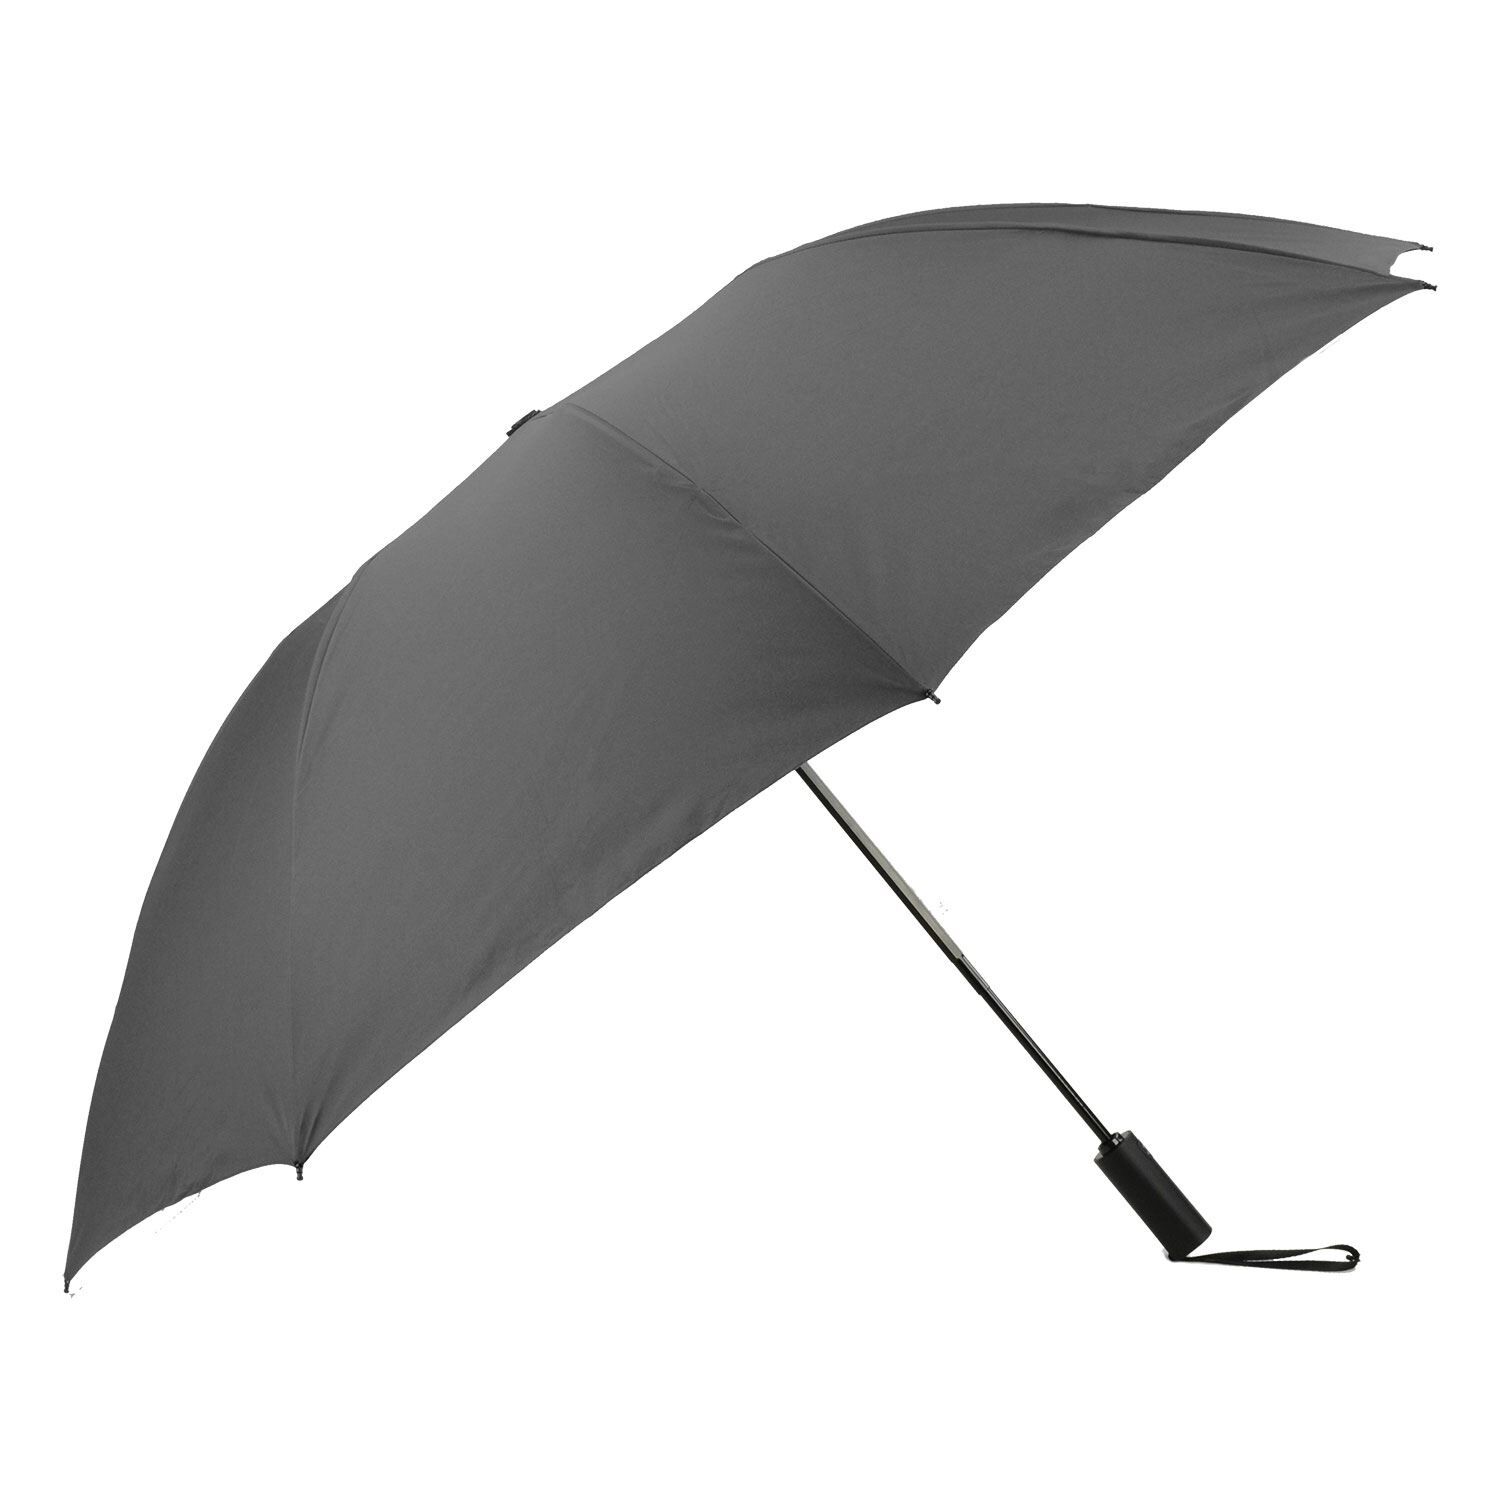 Custom Branded ShedRain Umbrellas - Charcoal